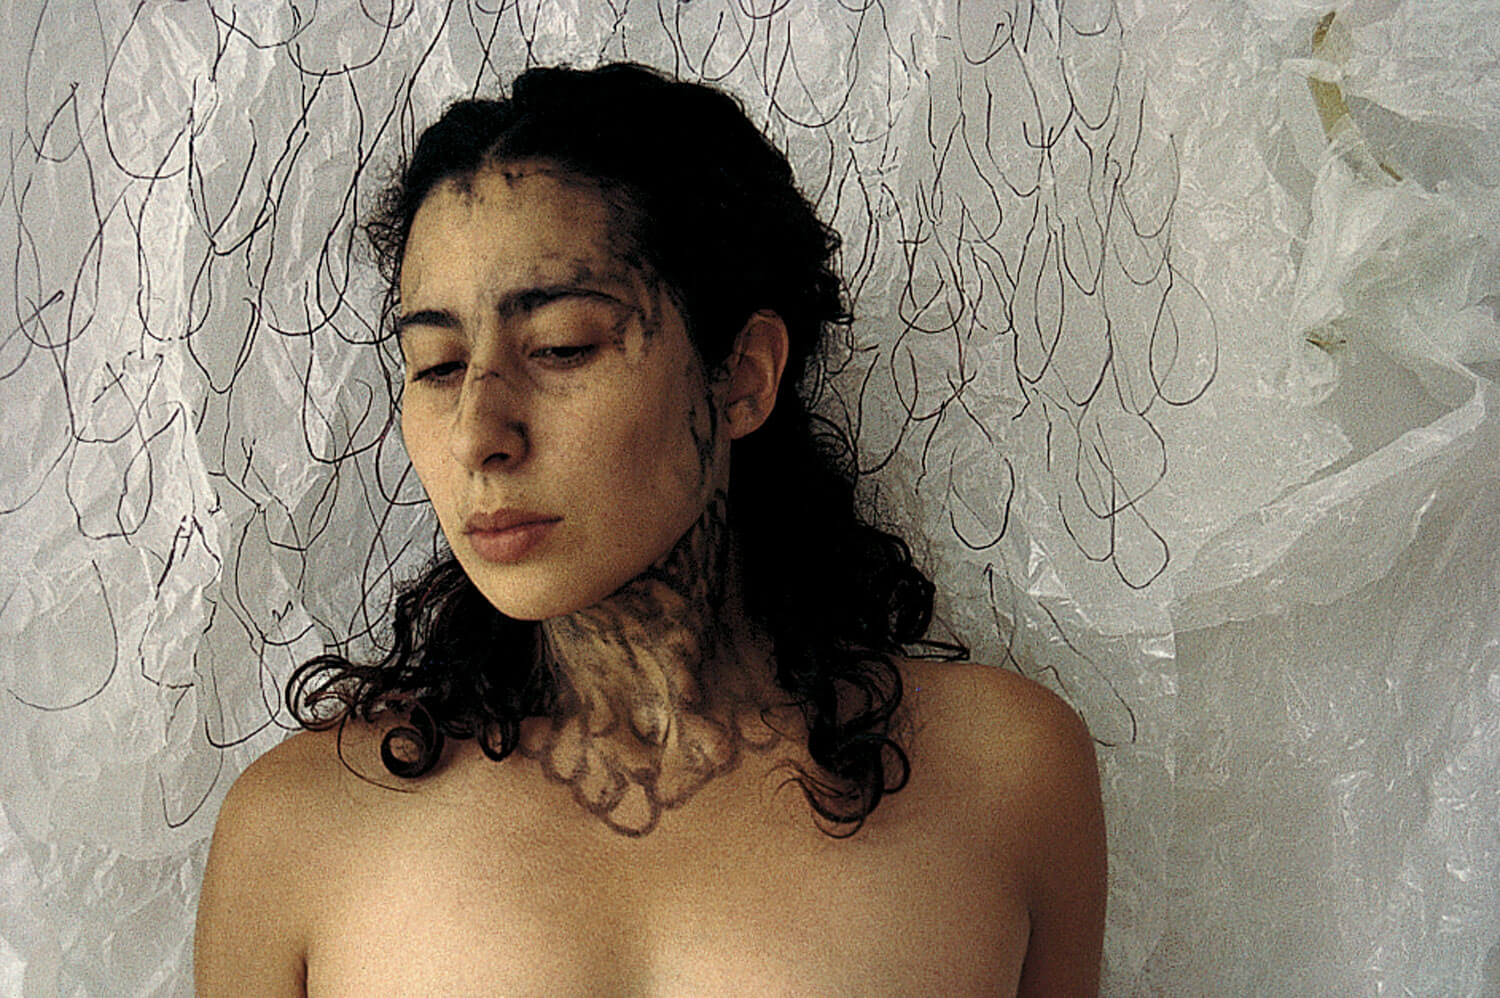 Laura Torrado. Erased portrait, 1994